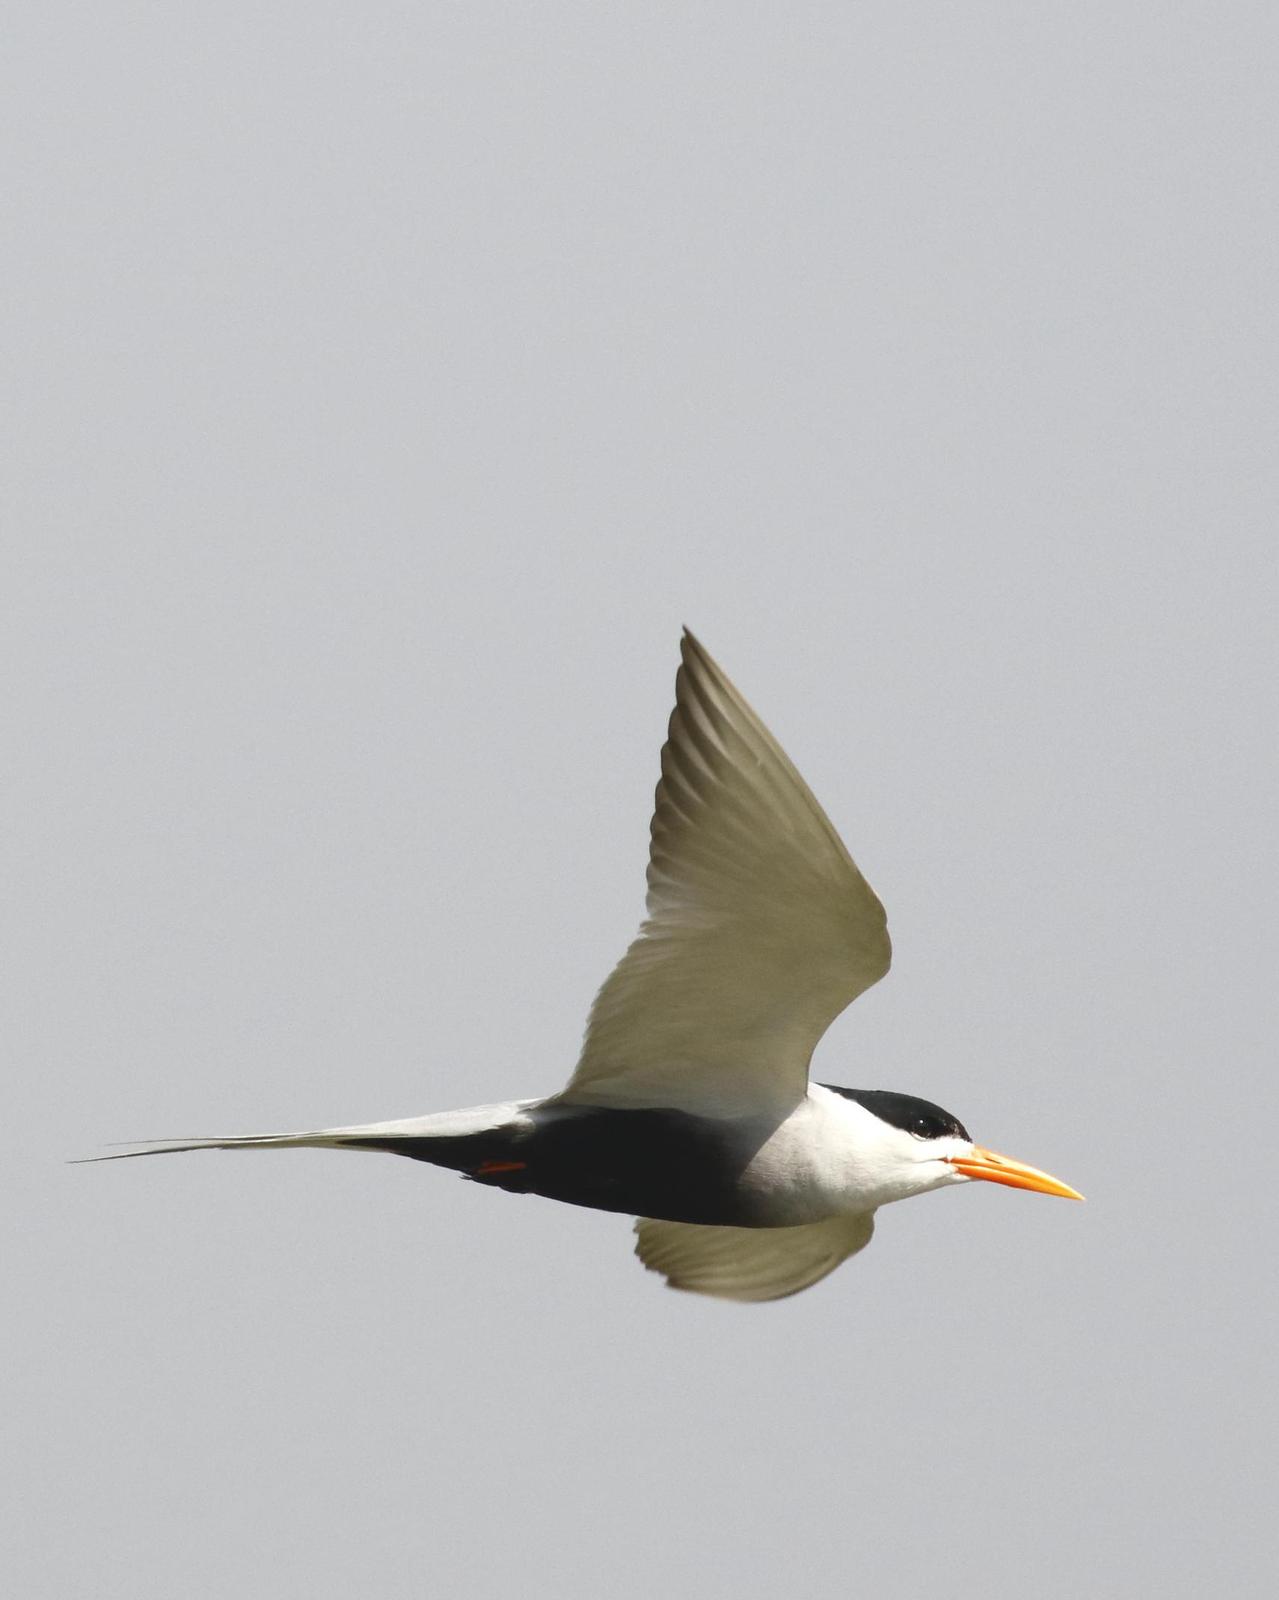 Black-bellied Tern Photo by Rahul Kaushik